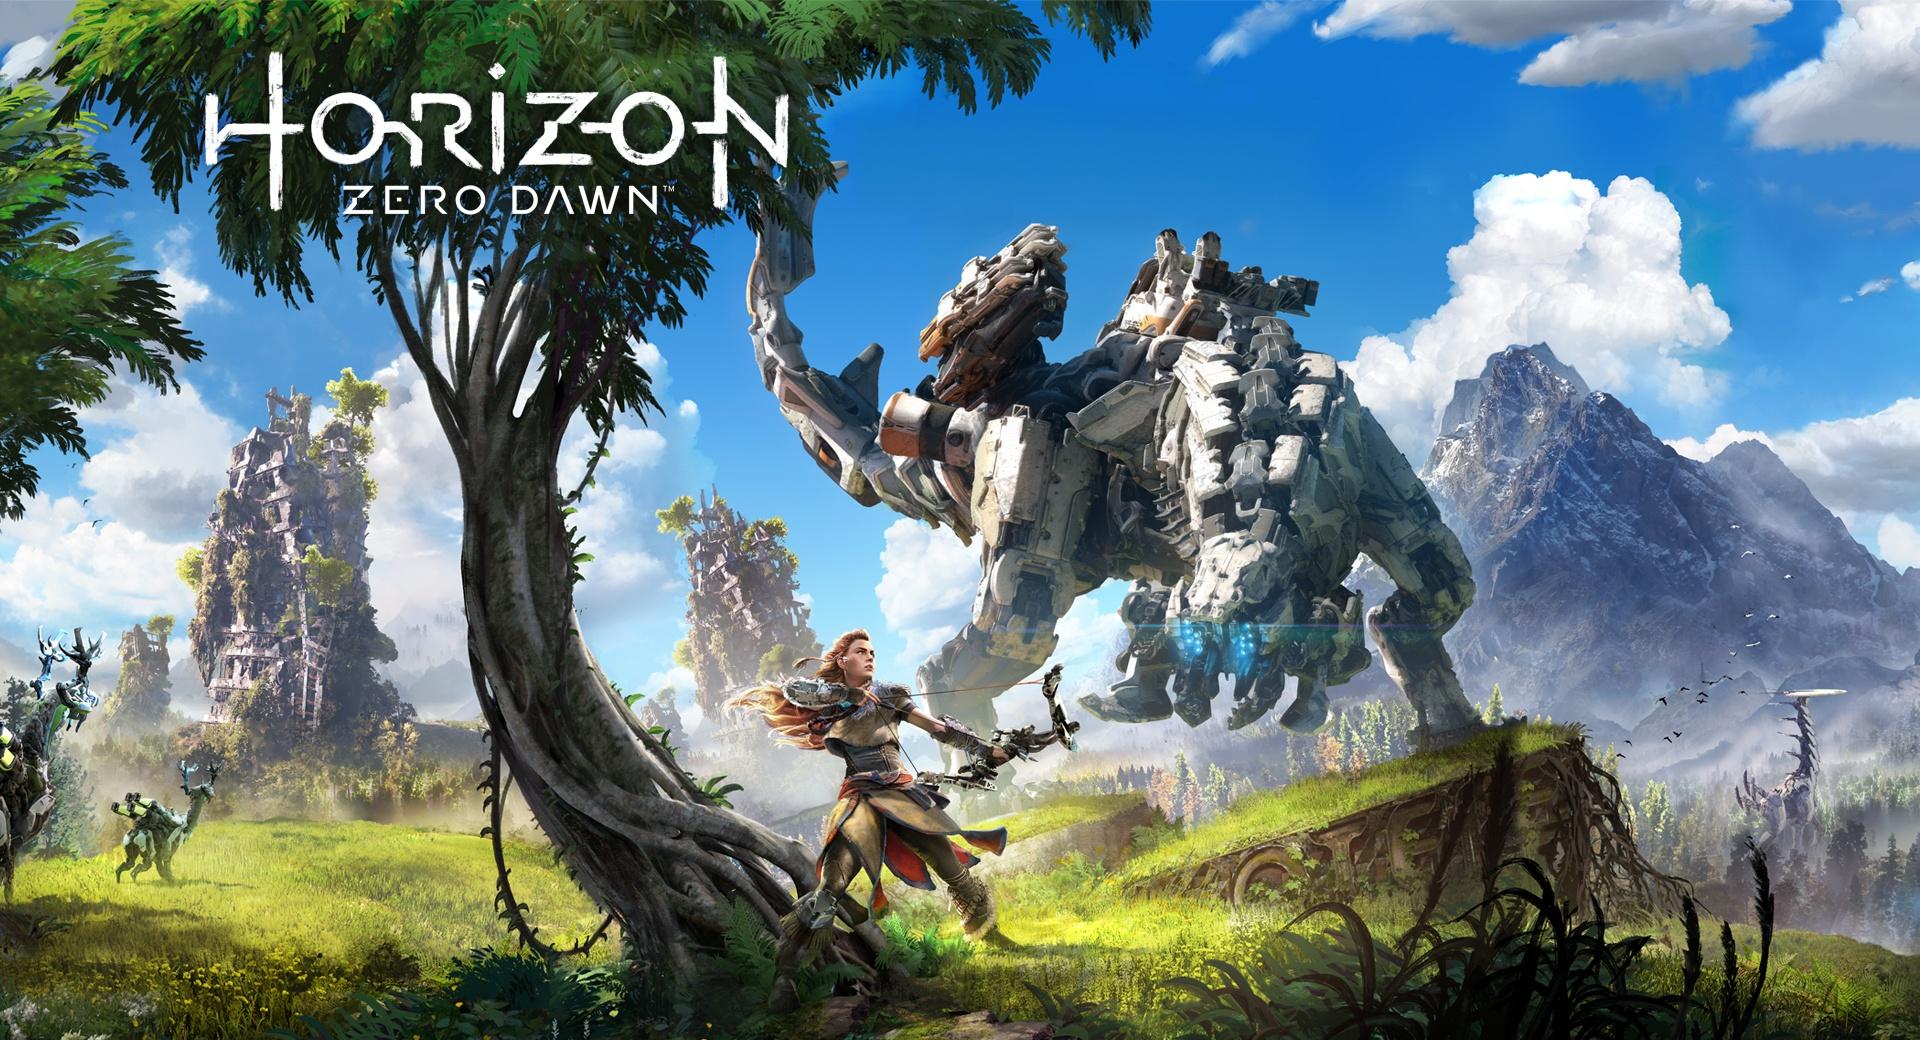 Horizon Zero Dawn 2017 Video Game at 1024 x 768 size wallpapers HD quality